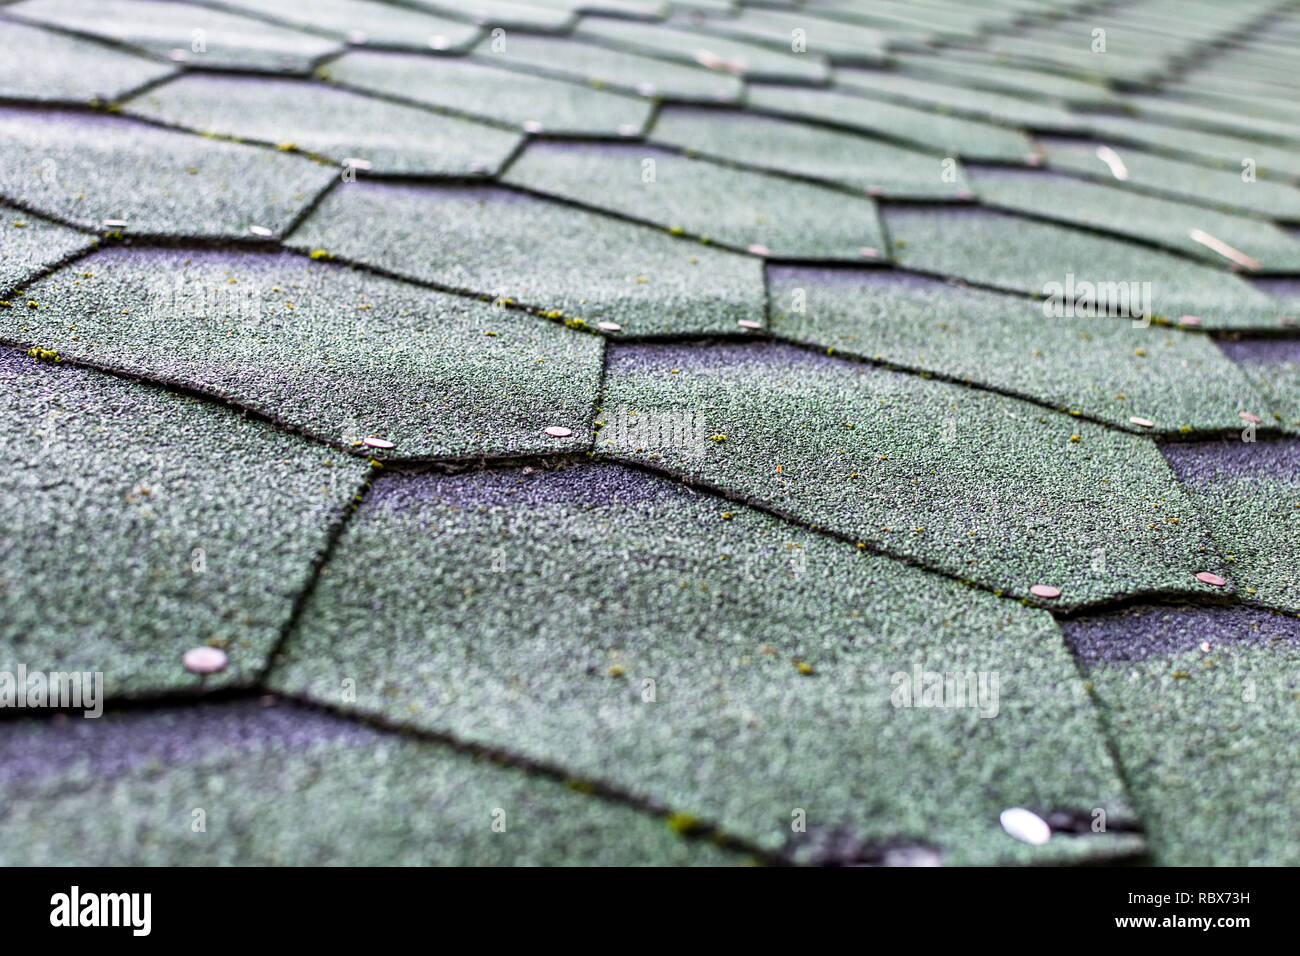 https://c8.alamy.com/comp/RBX73H/fragment-of-green-shingle-tile-texture-roof-for-background-closeup-detail-flexible-soft-built-up-bituminous-roofing-RBX73H.jpg